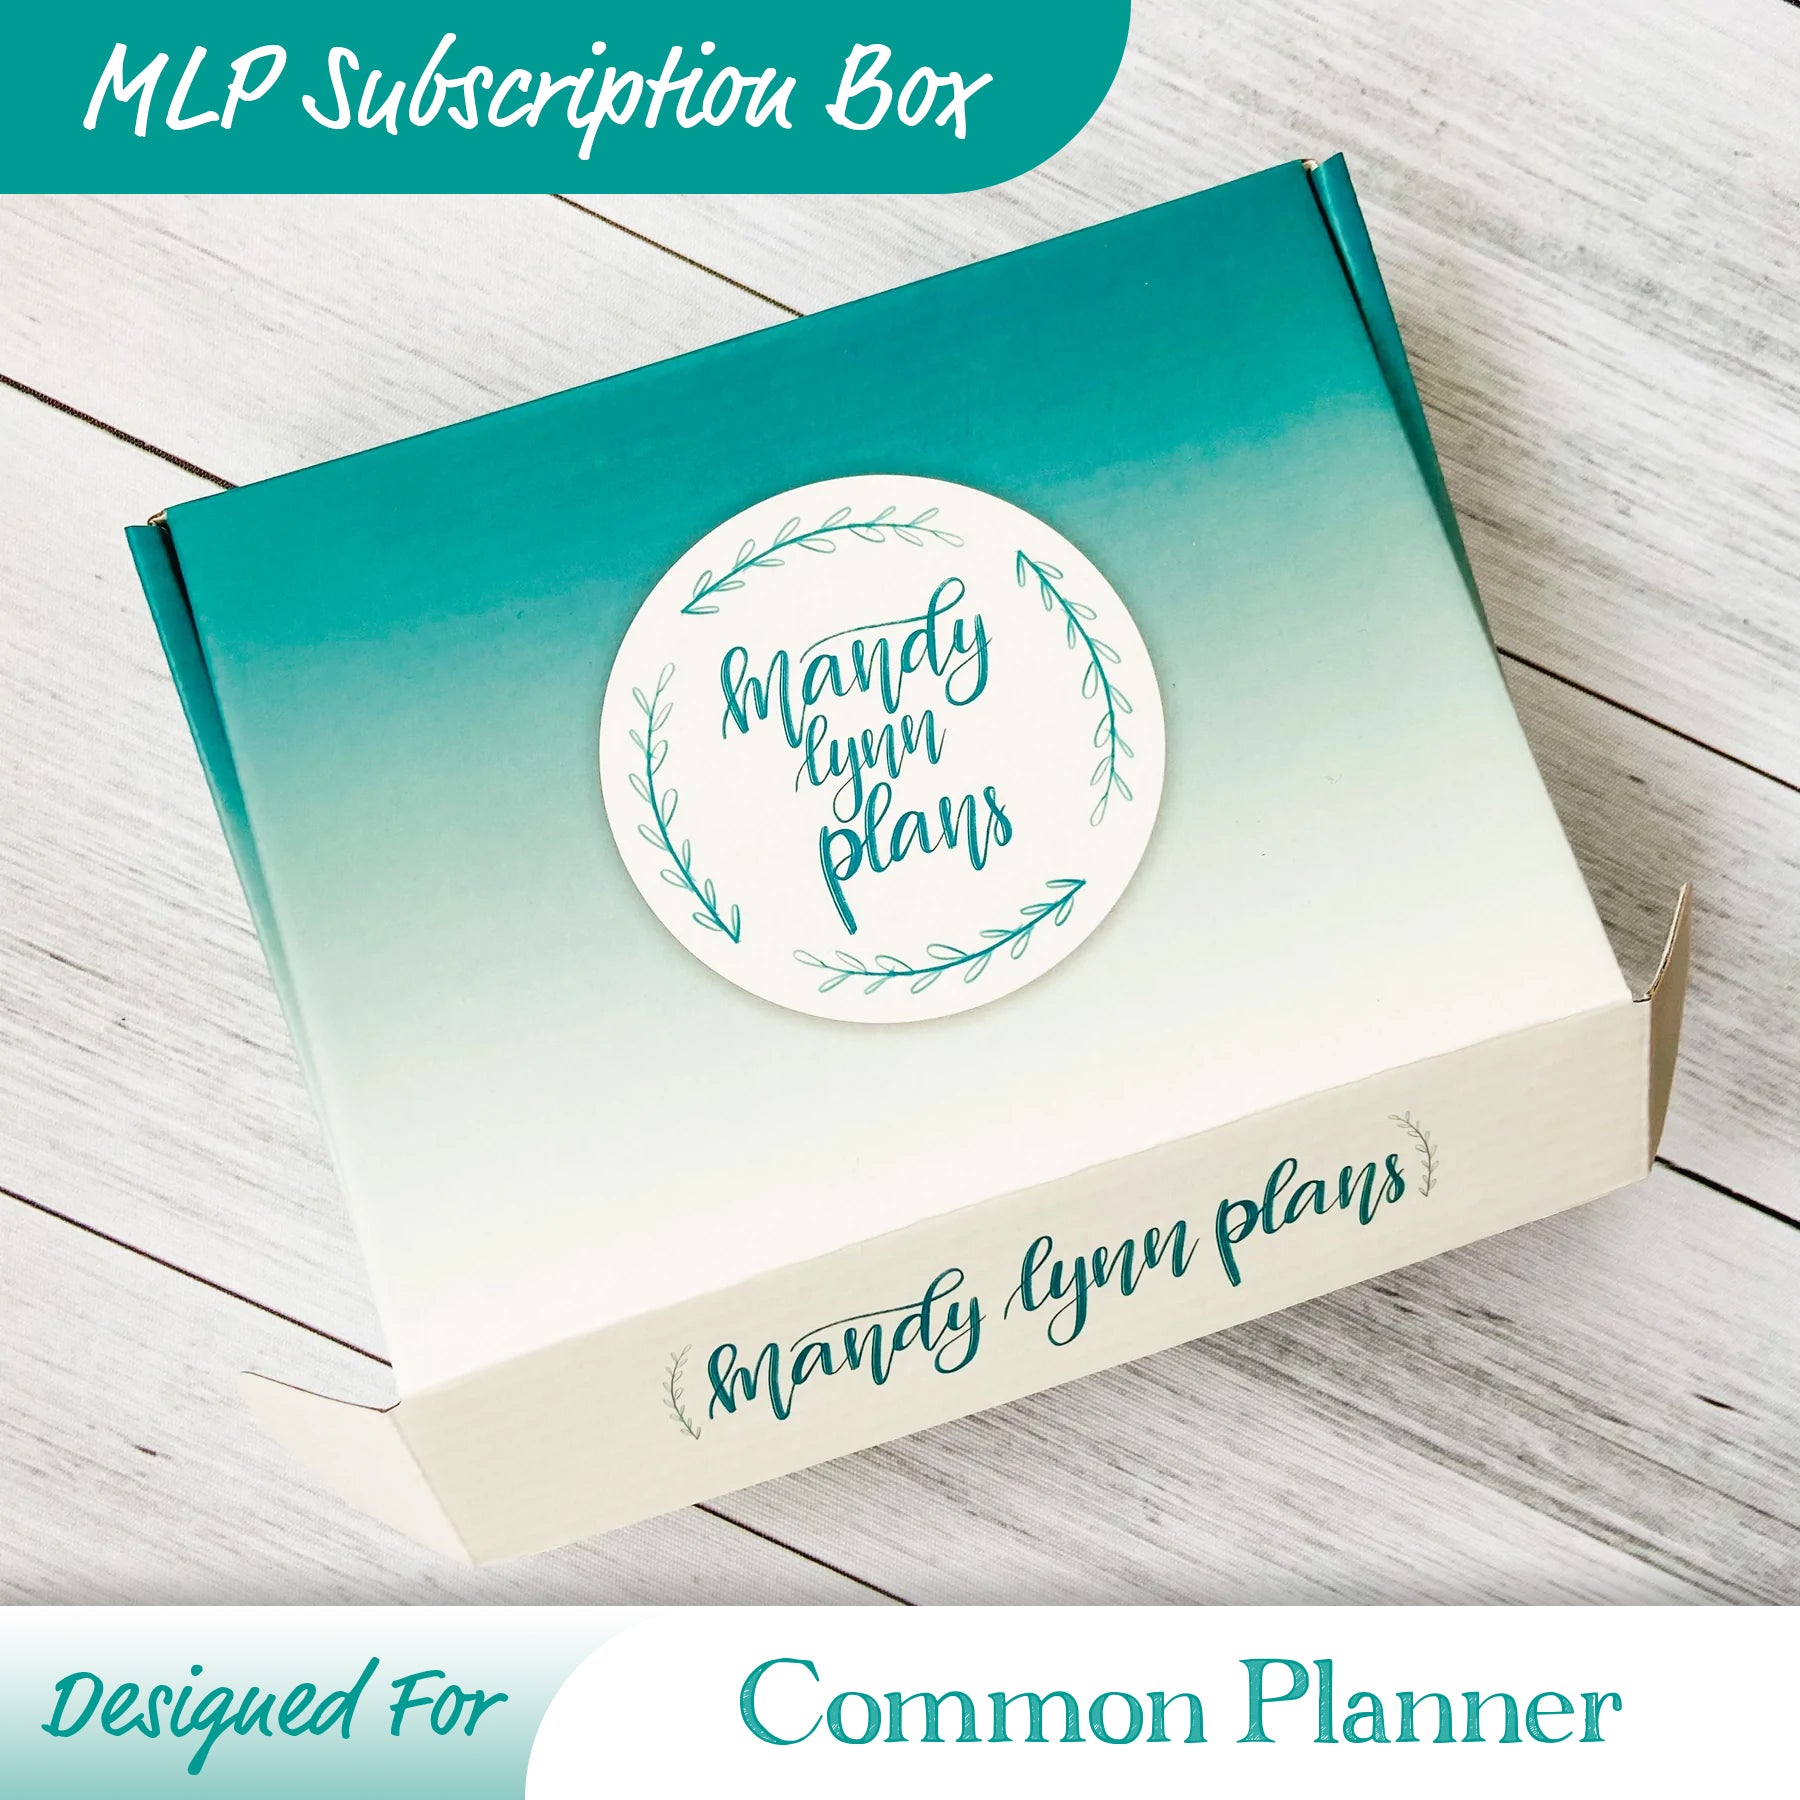 MLP Subscription Box (Common Planner) – Mandy Lynn Plans